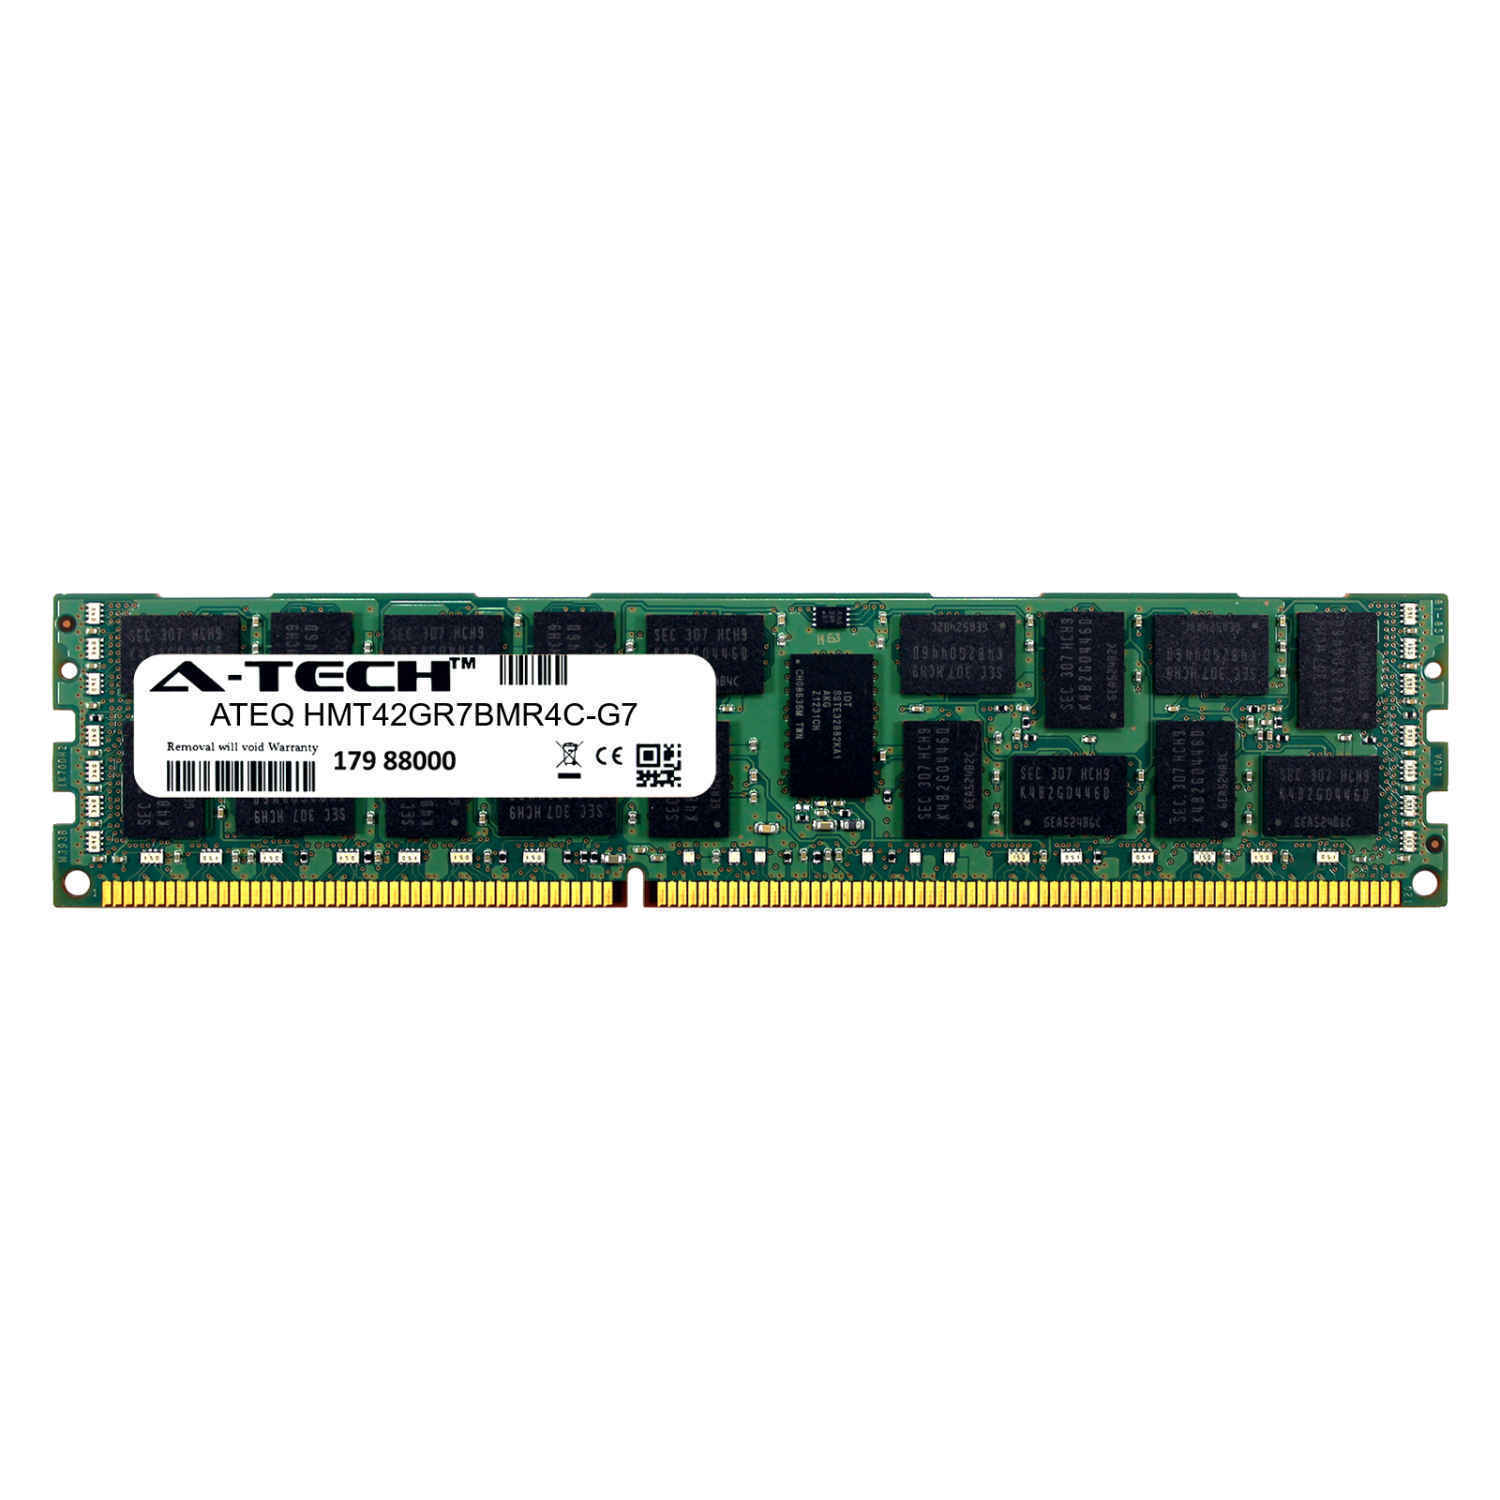 Hynix HMT42GR7BMR4C-G7 A-Tech Equivalent 16GB DDR3 1066 4rx4 Server Memory RAM